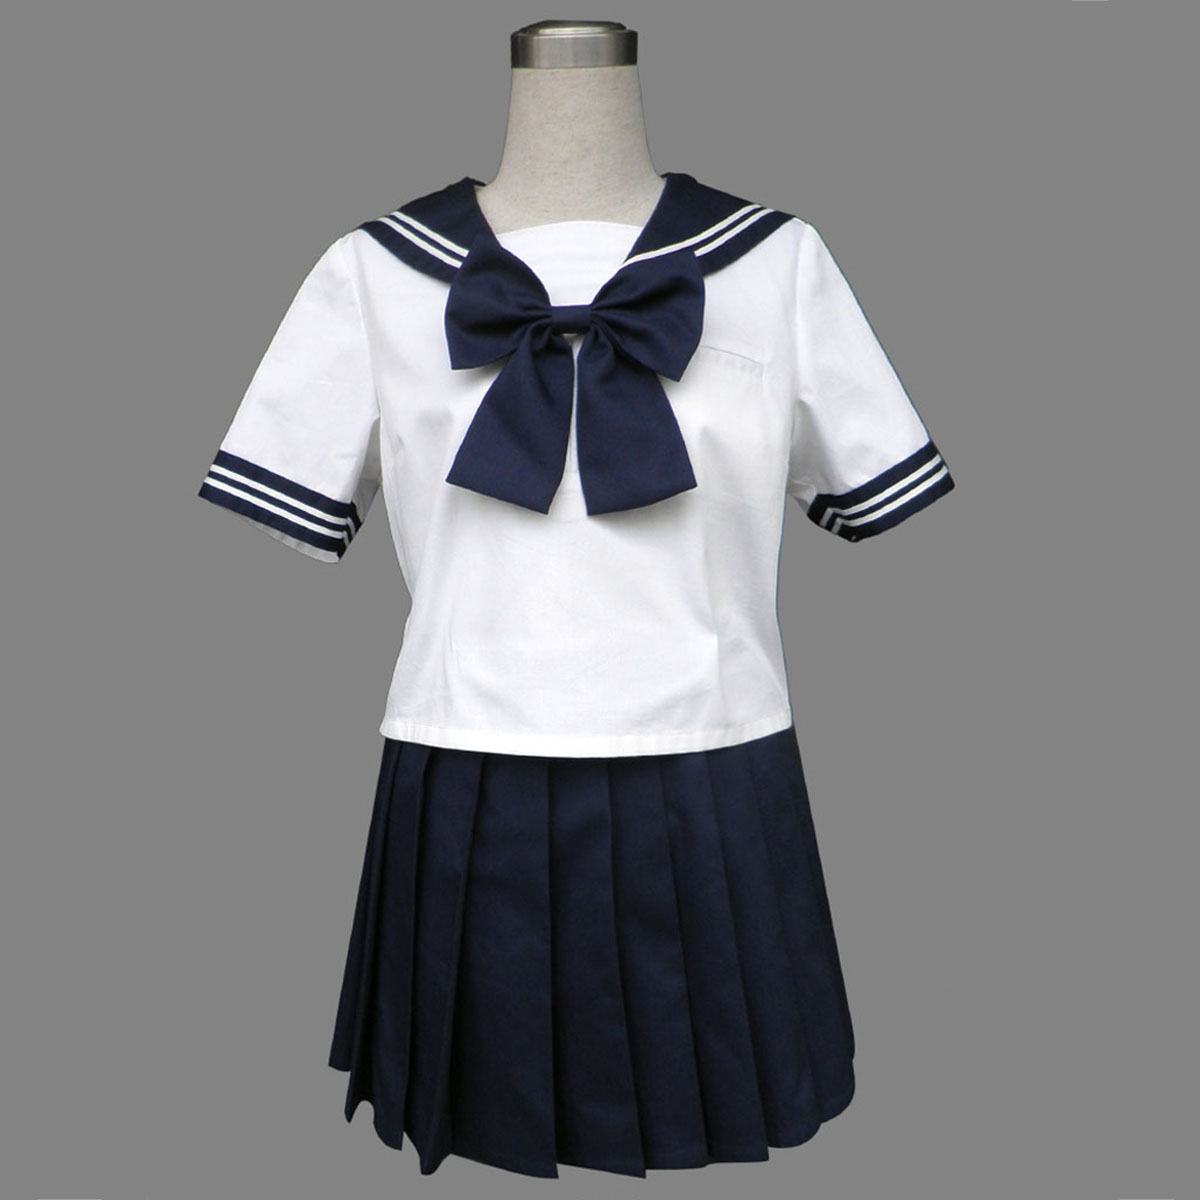 Royal Blau Short Sleeves Sailor Uniformen 8 Cosplay Kostüme Germany